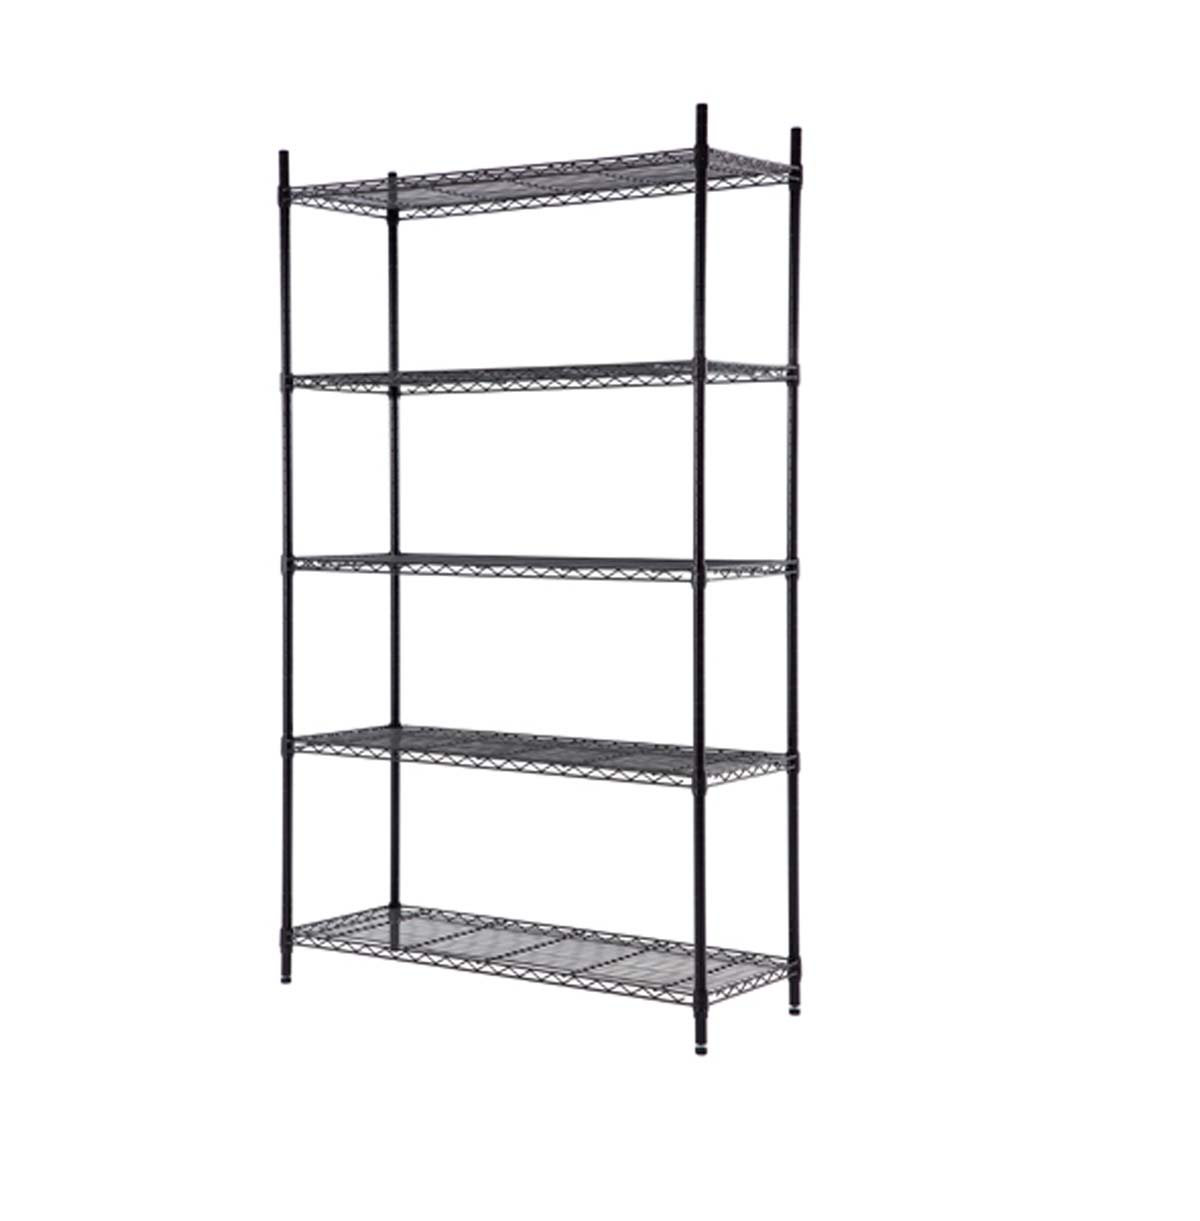 Selection of warehouse shelves for shelf renovation